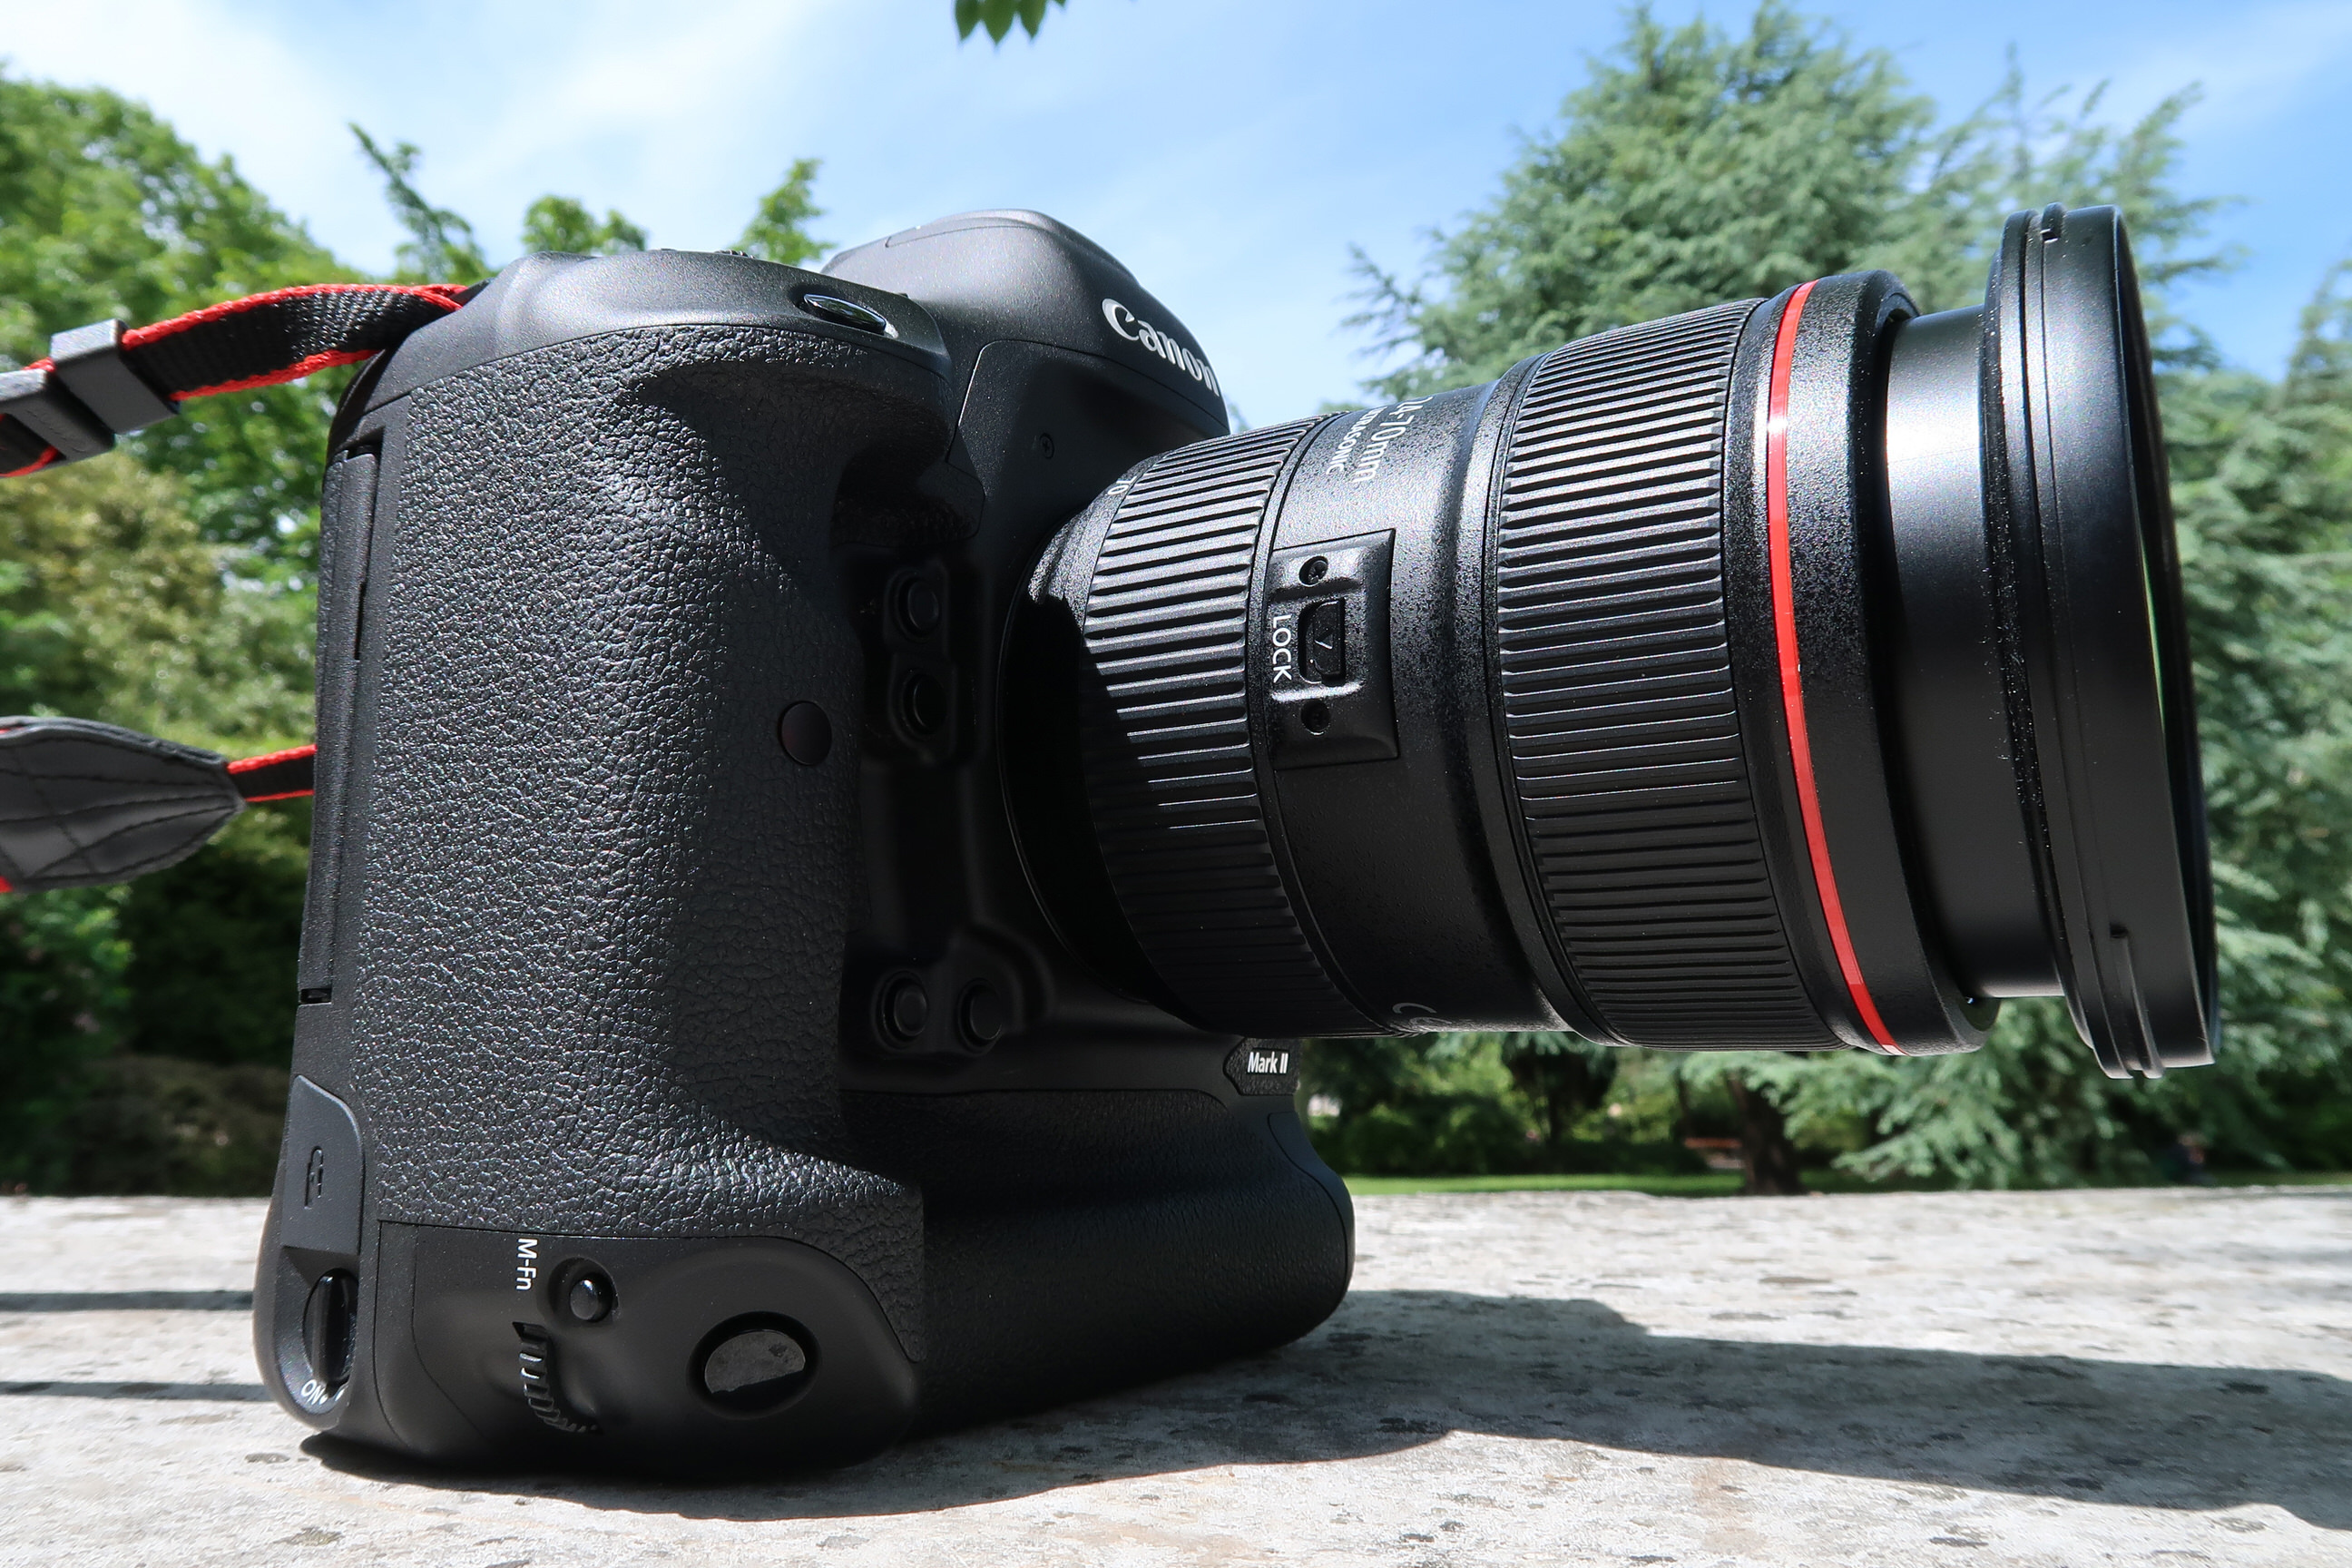 Canon EOS 1D X Mark II verdict